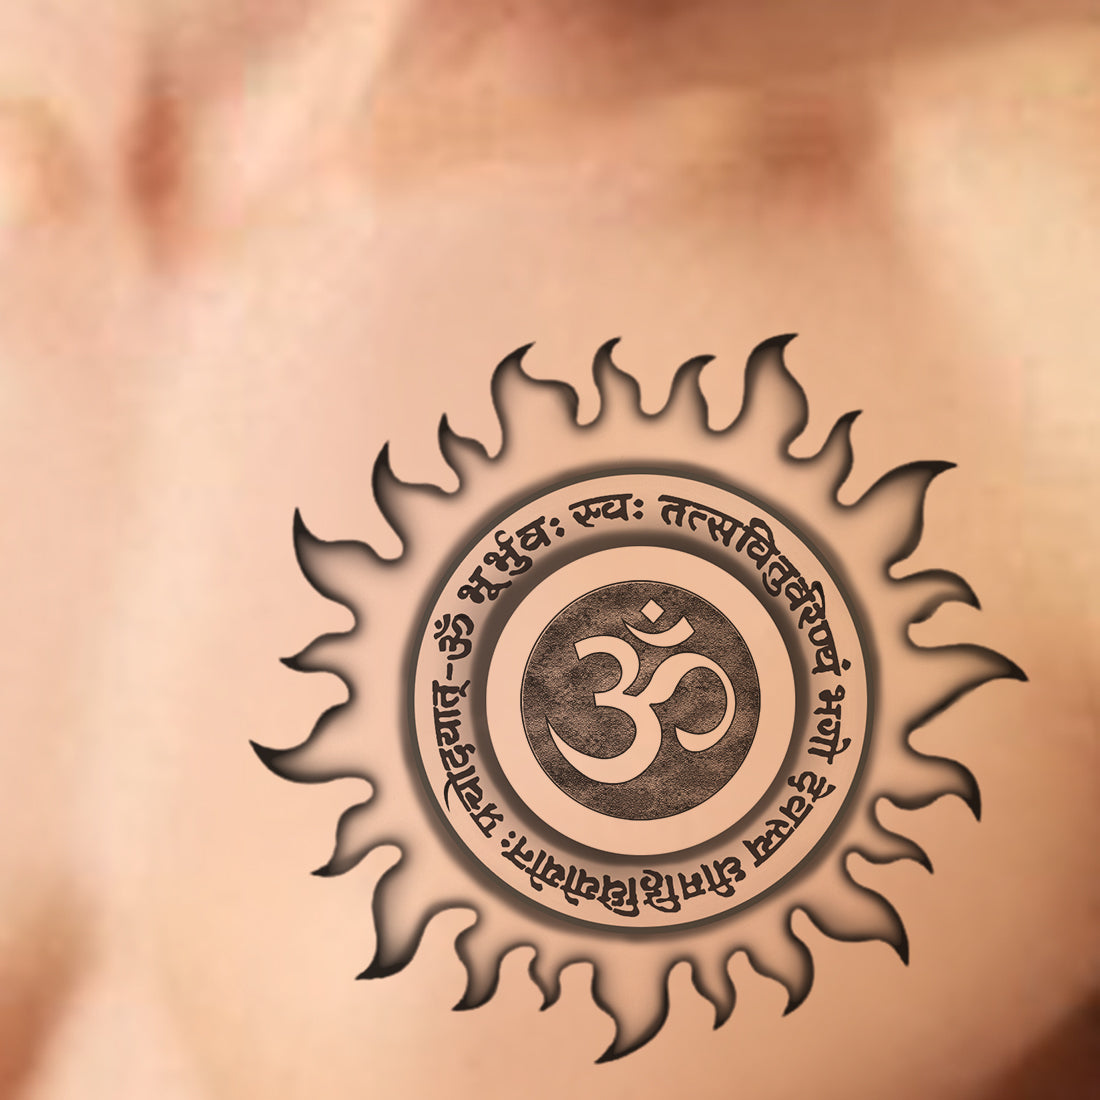 Swami Samarth Tattoo - Inspiring Body Art